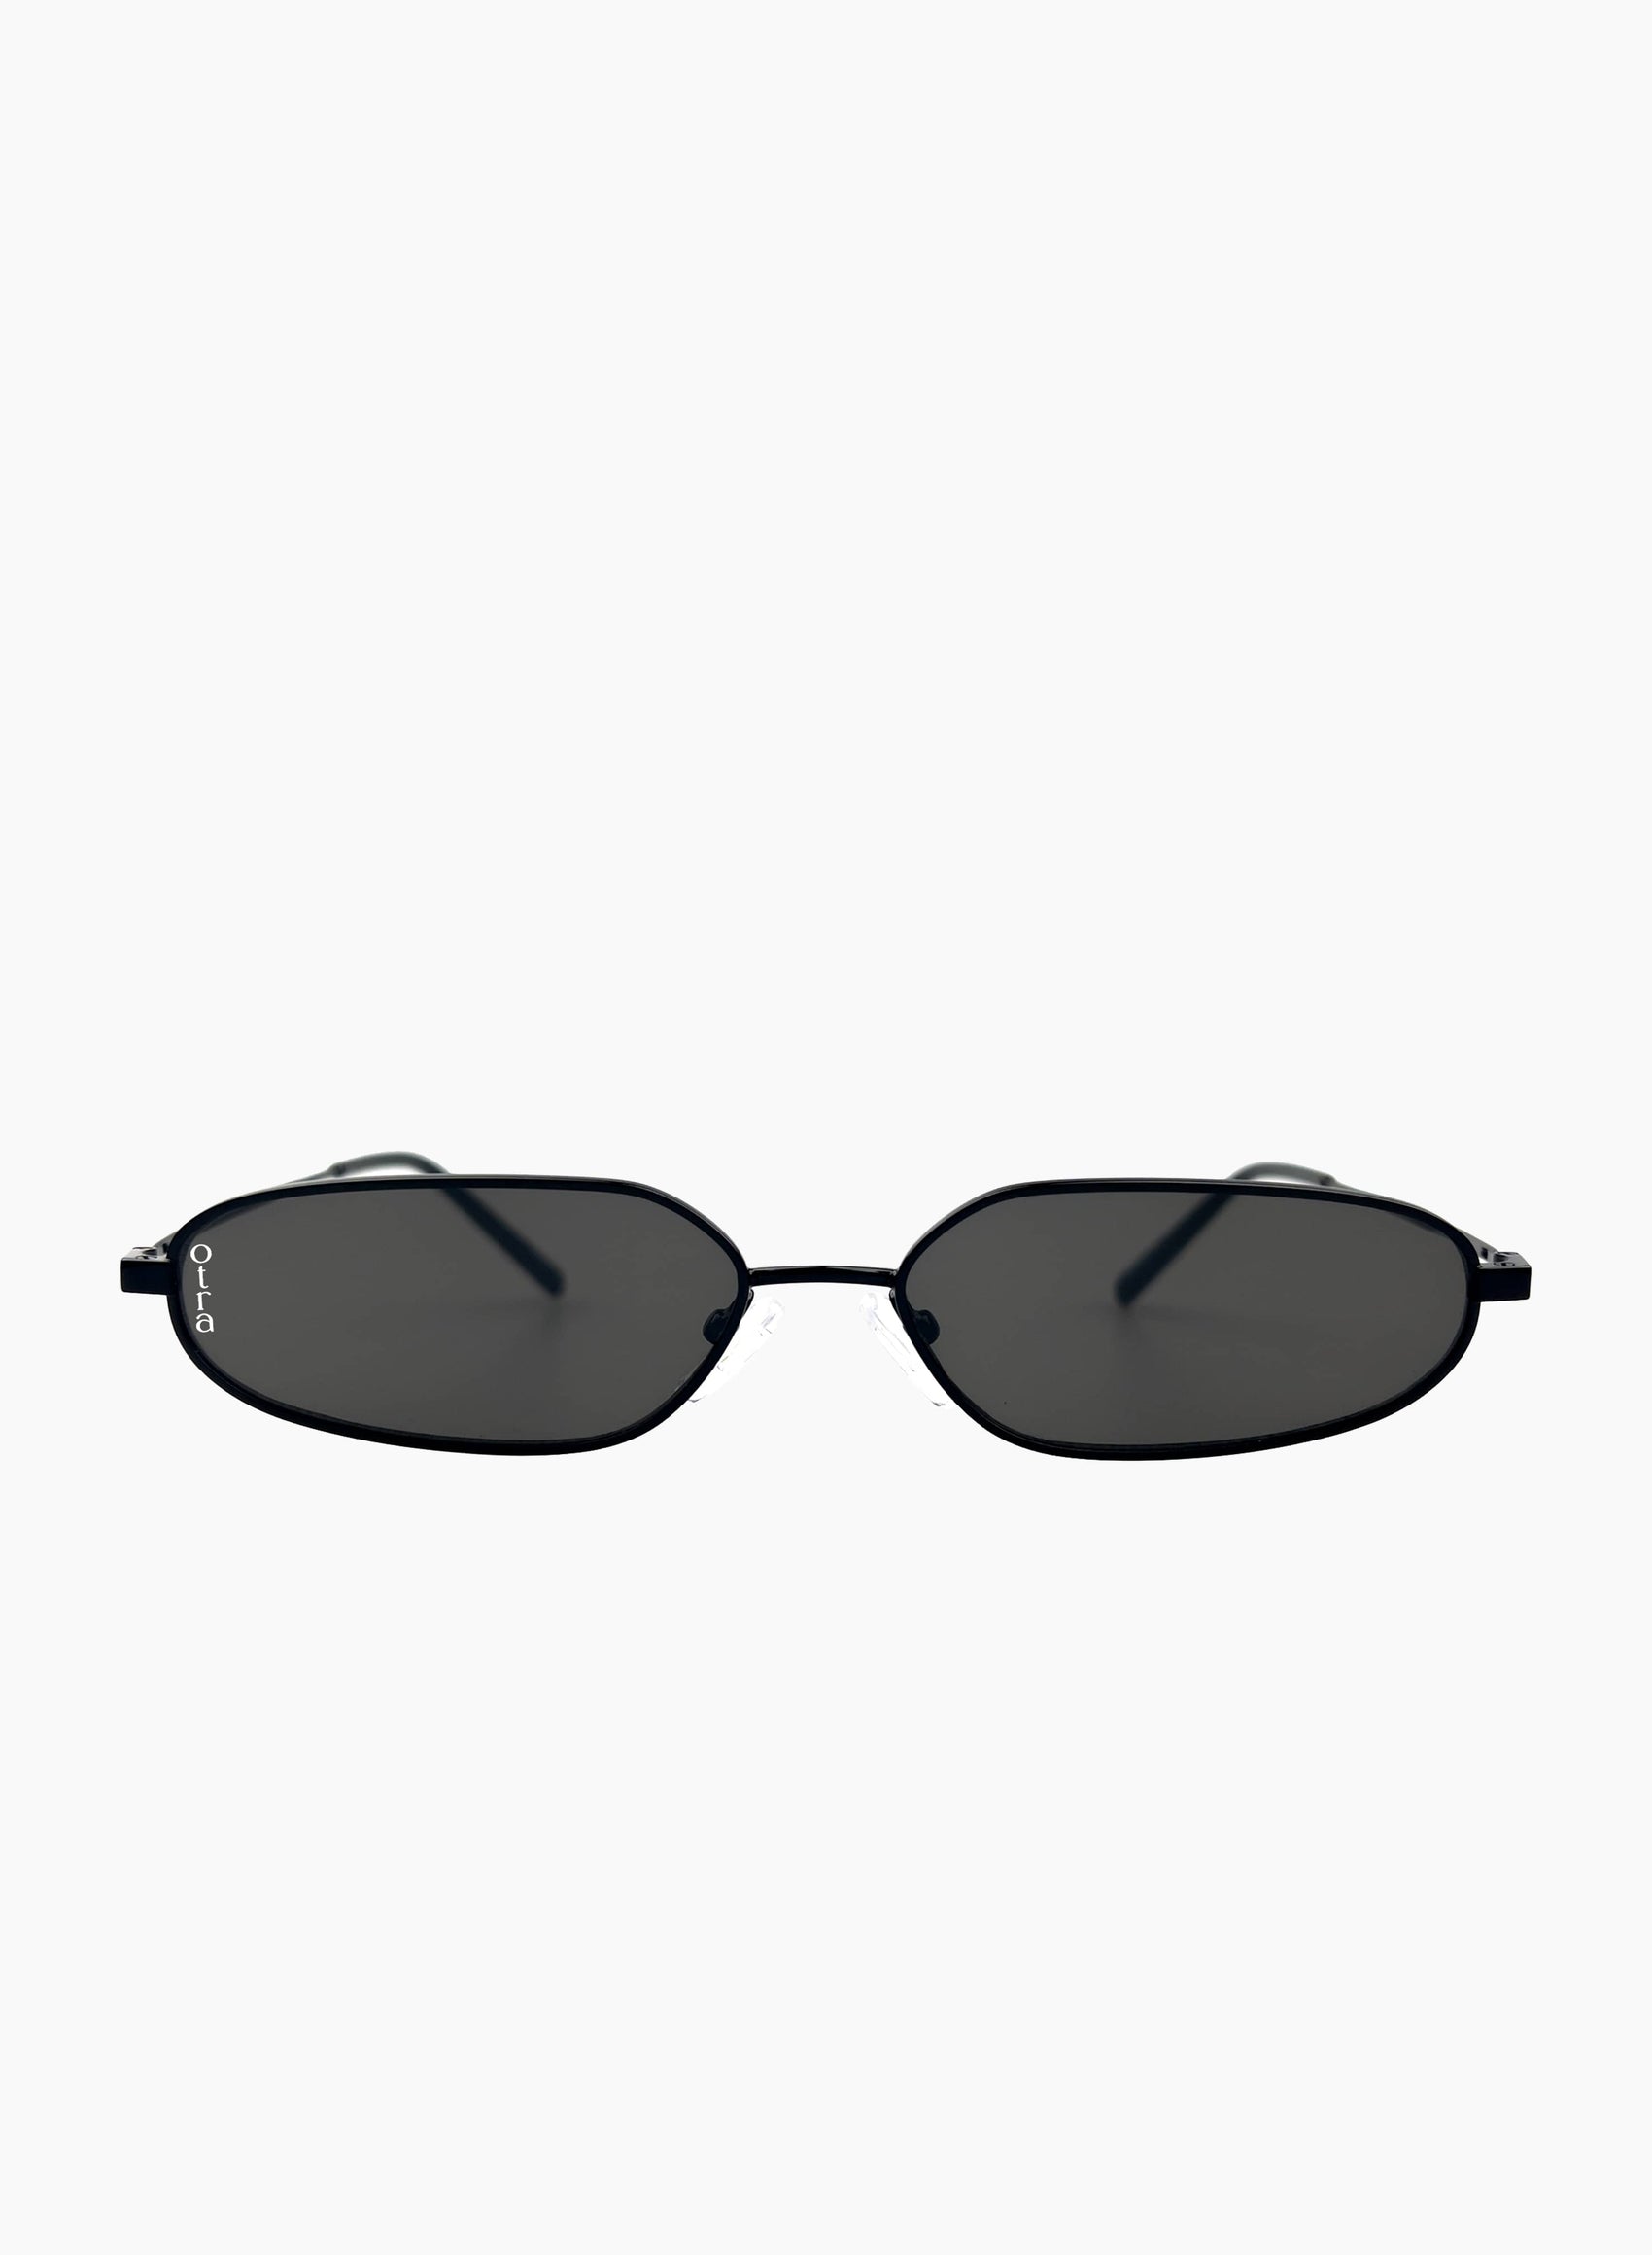 Drew slim metal sunglasses in black